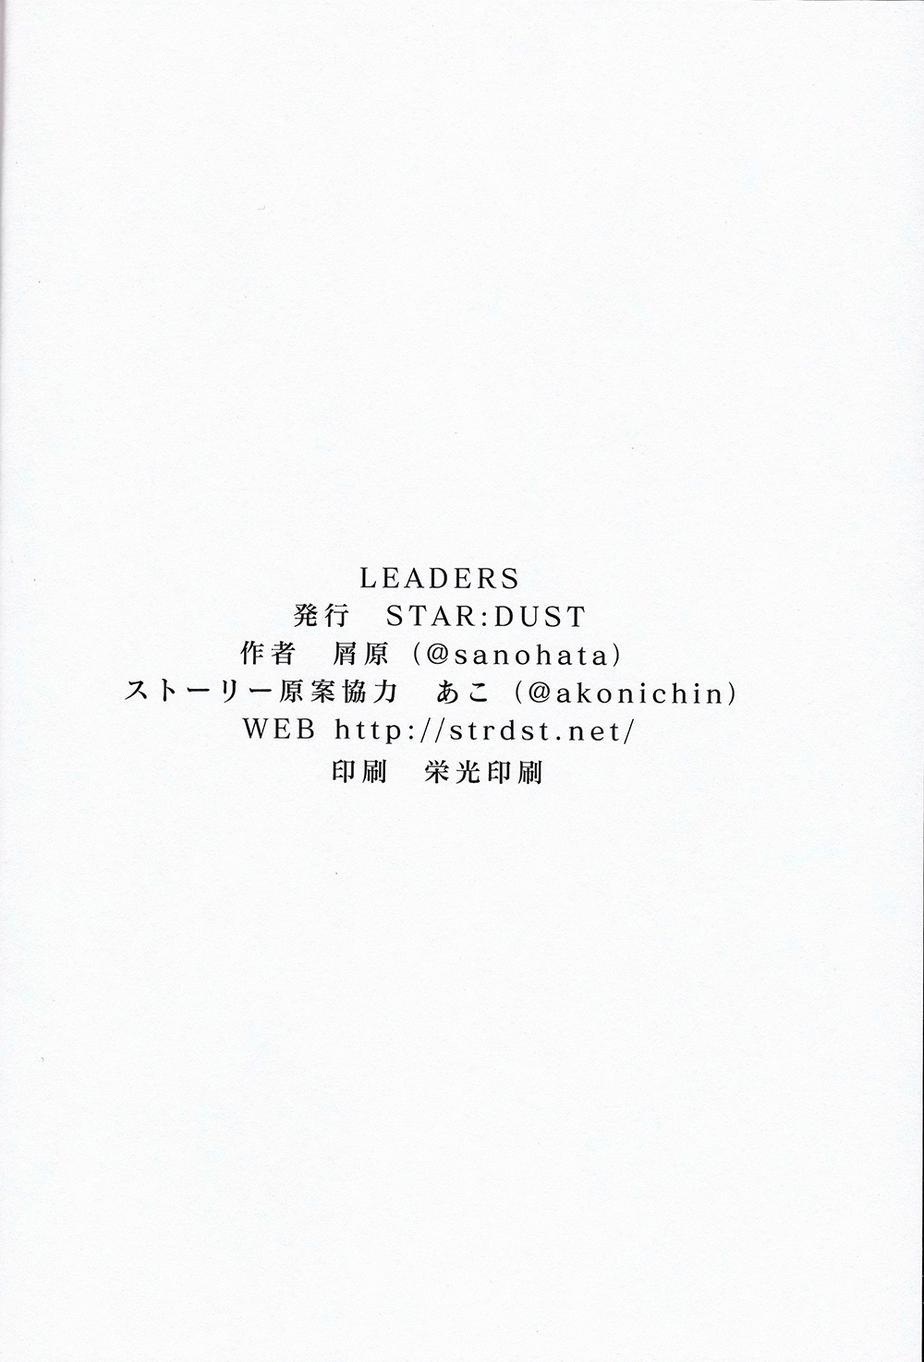 LoveLive - LEADERS - 2